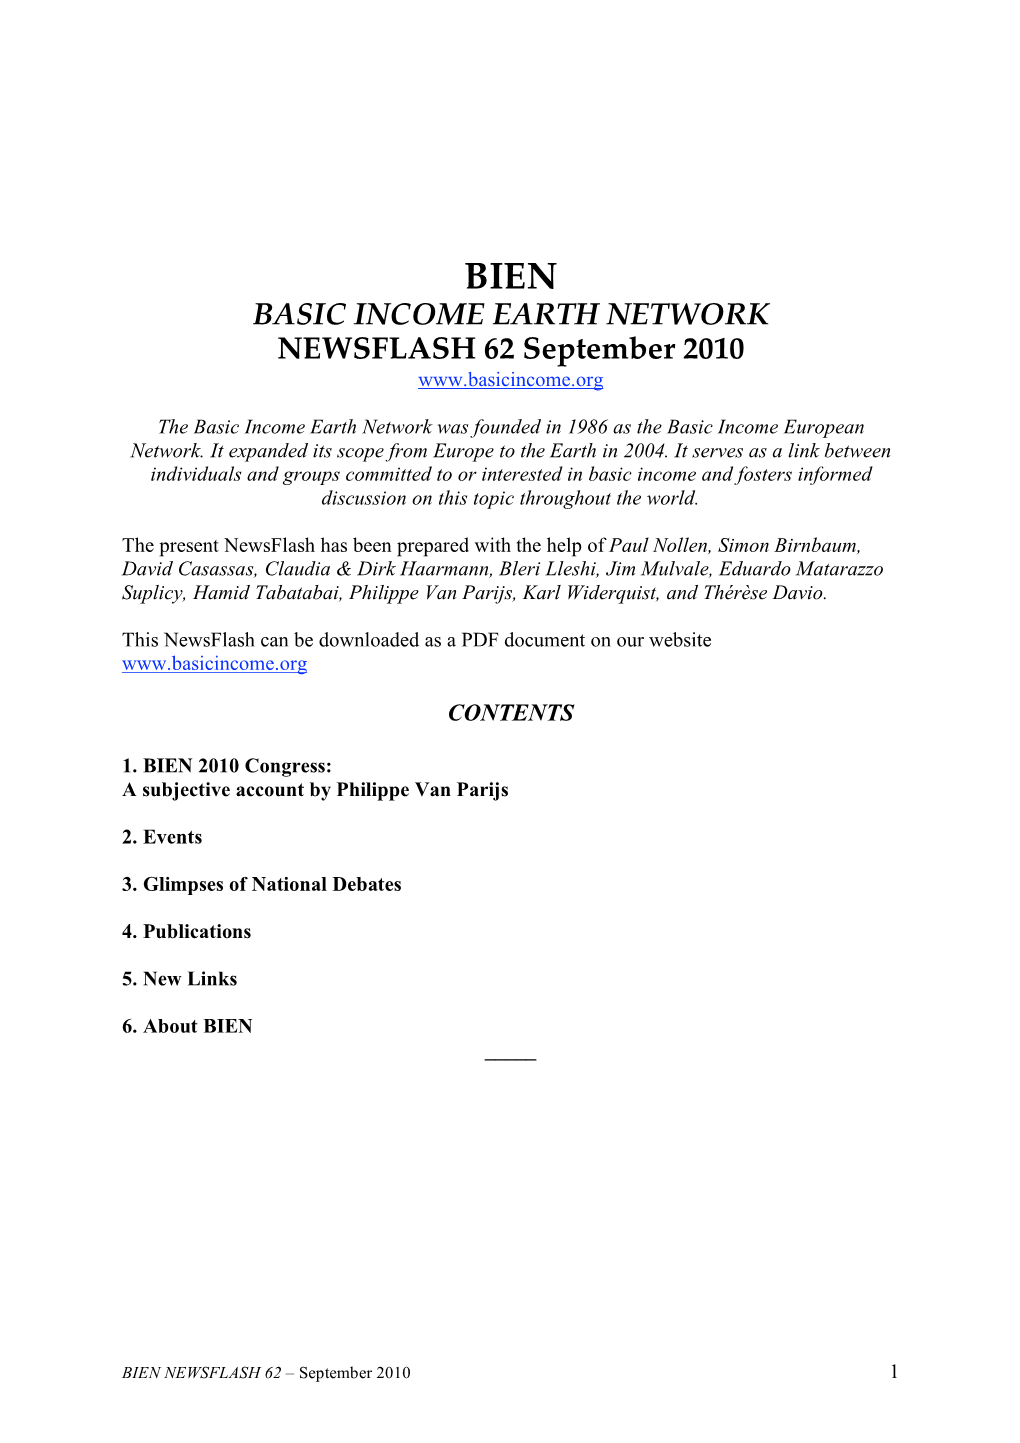 BASIC INCOME EARTH NETWORK NEWSFLASH 62 September 2010